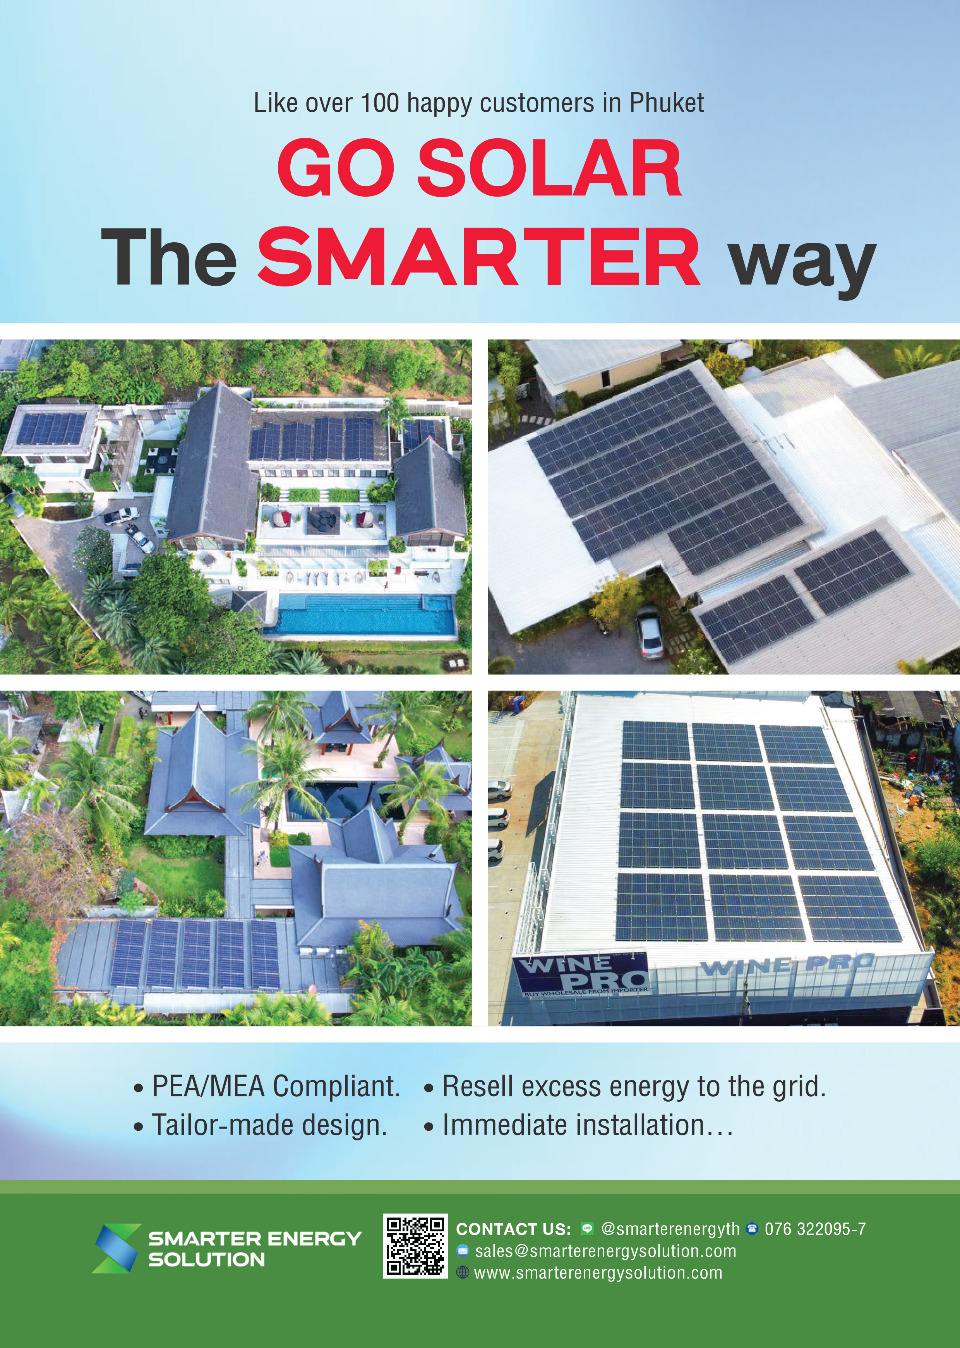 Smarter Energy Solution